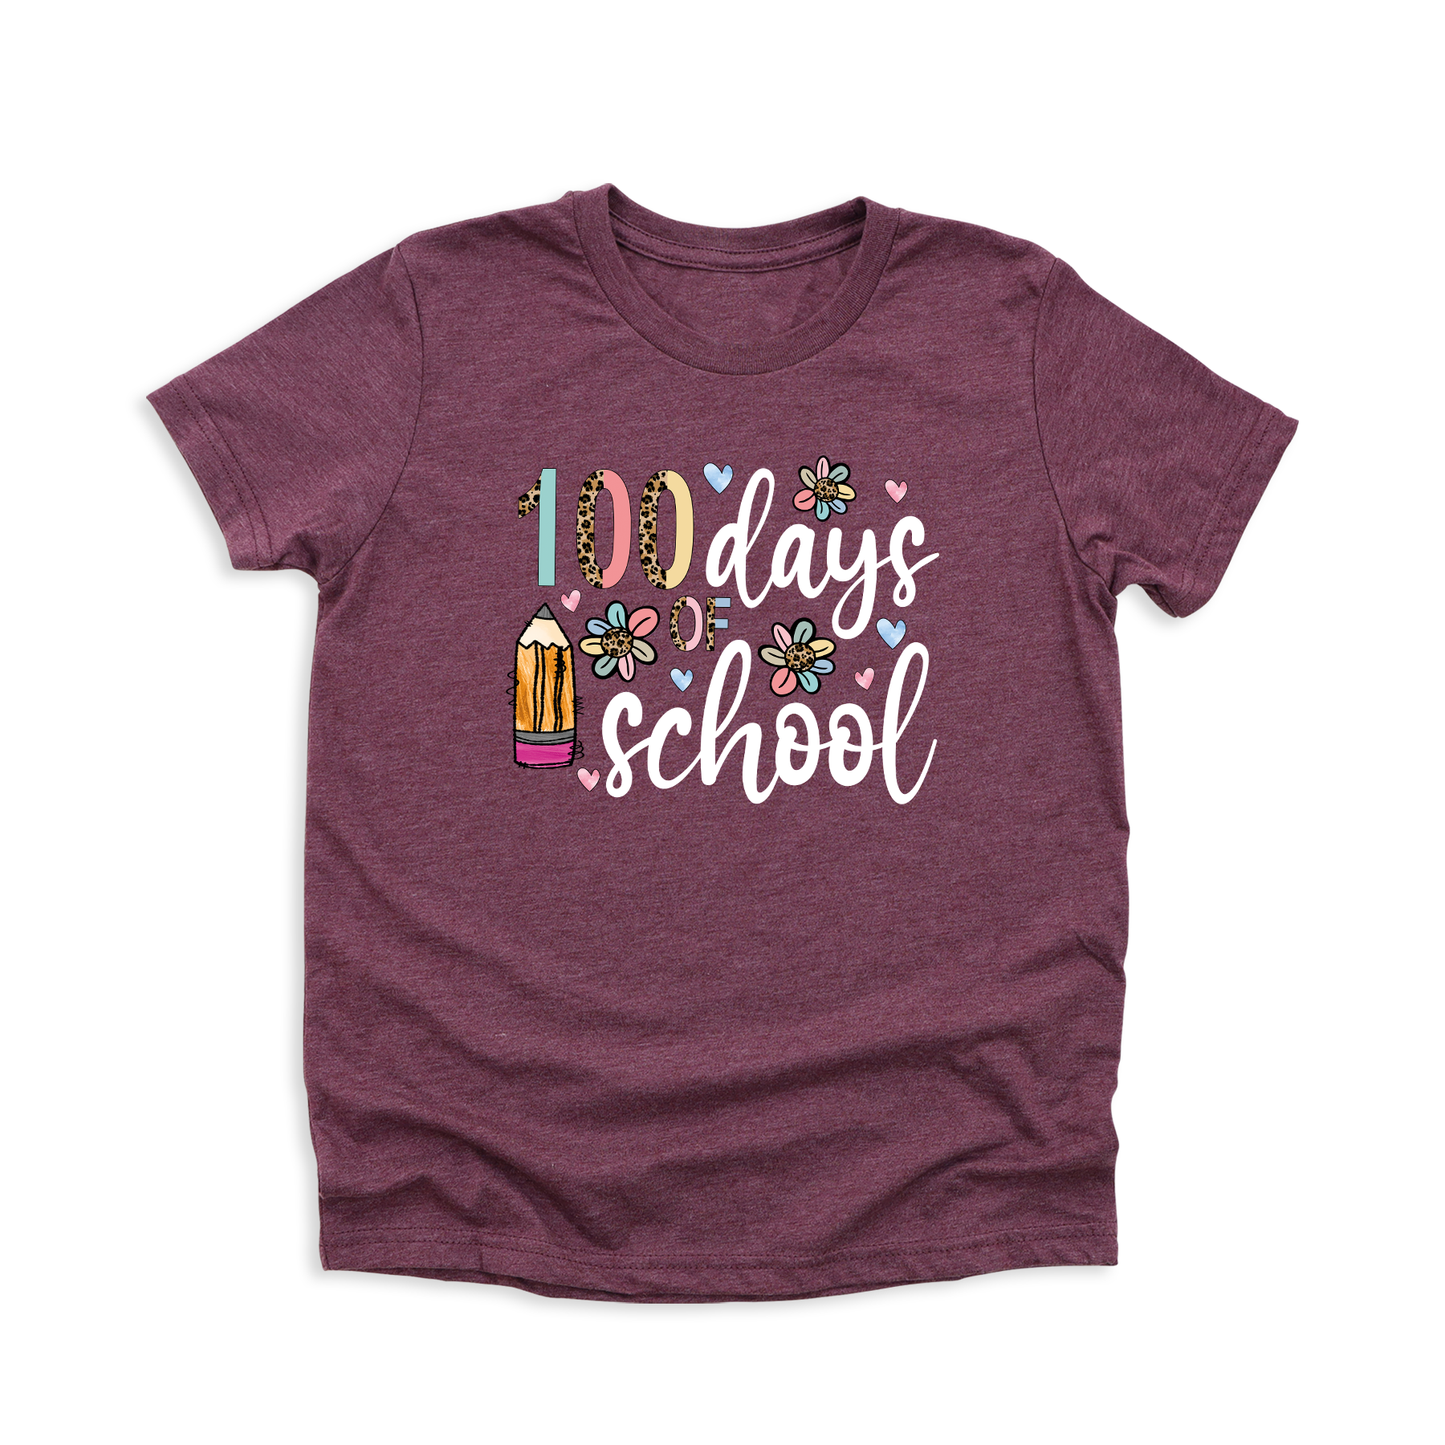 Unique 100 Days of School Shirts